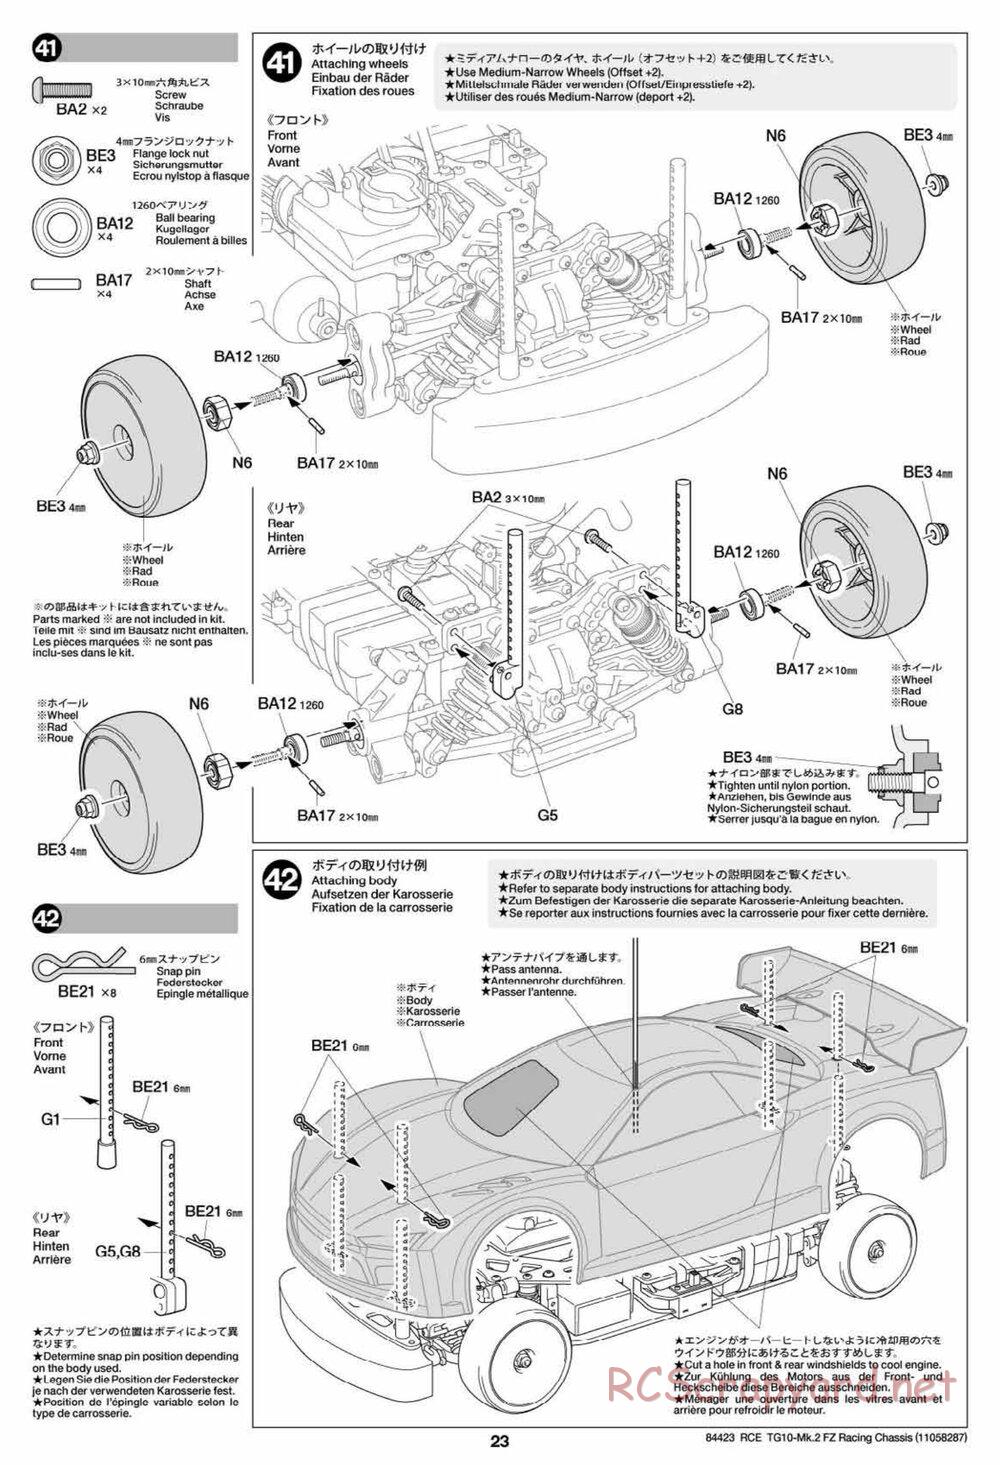 Tamiya - TG10 Mk.2 FZ Racing Chassis - Manual - Page 23